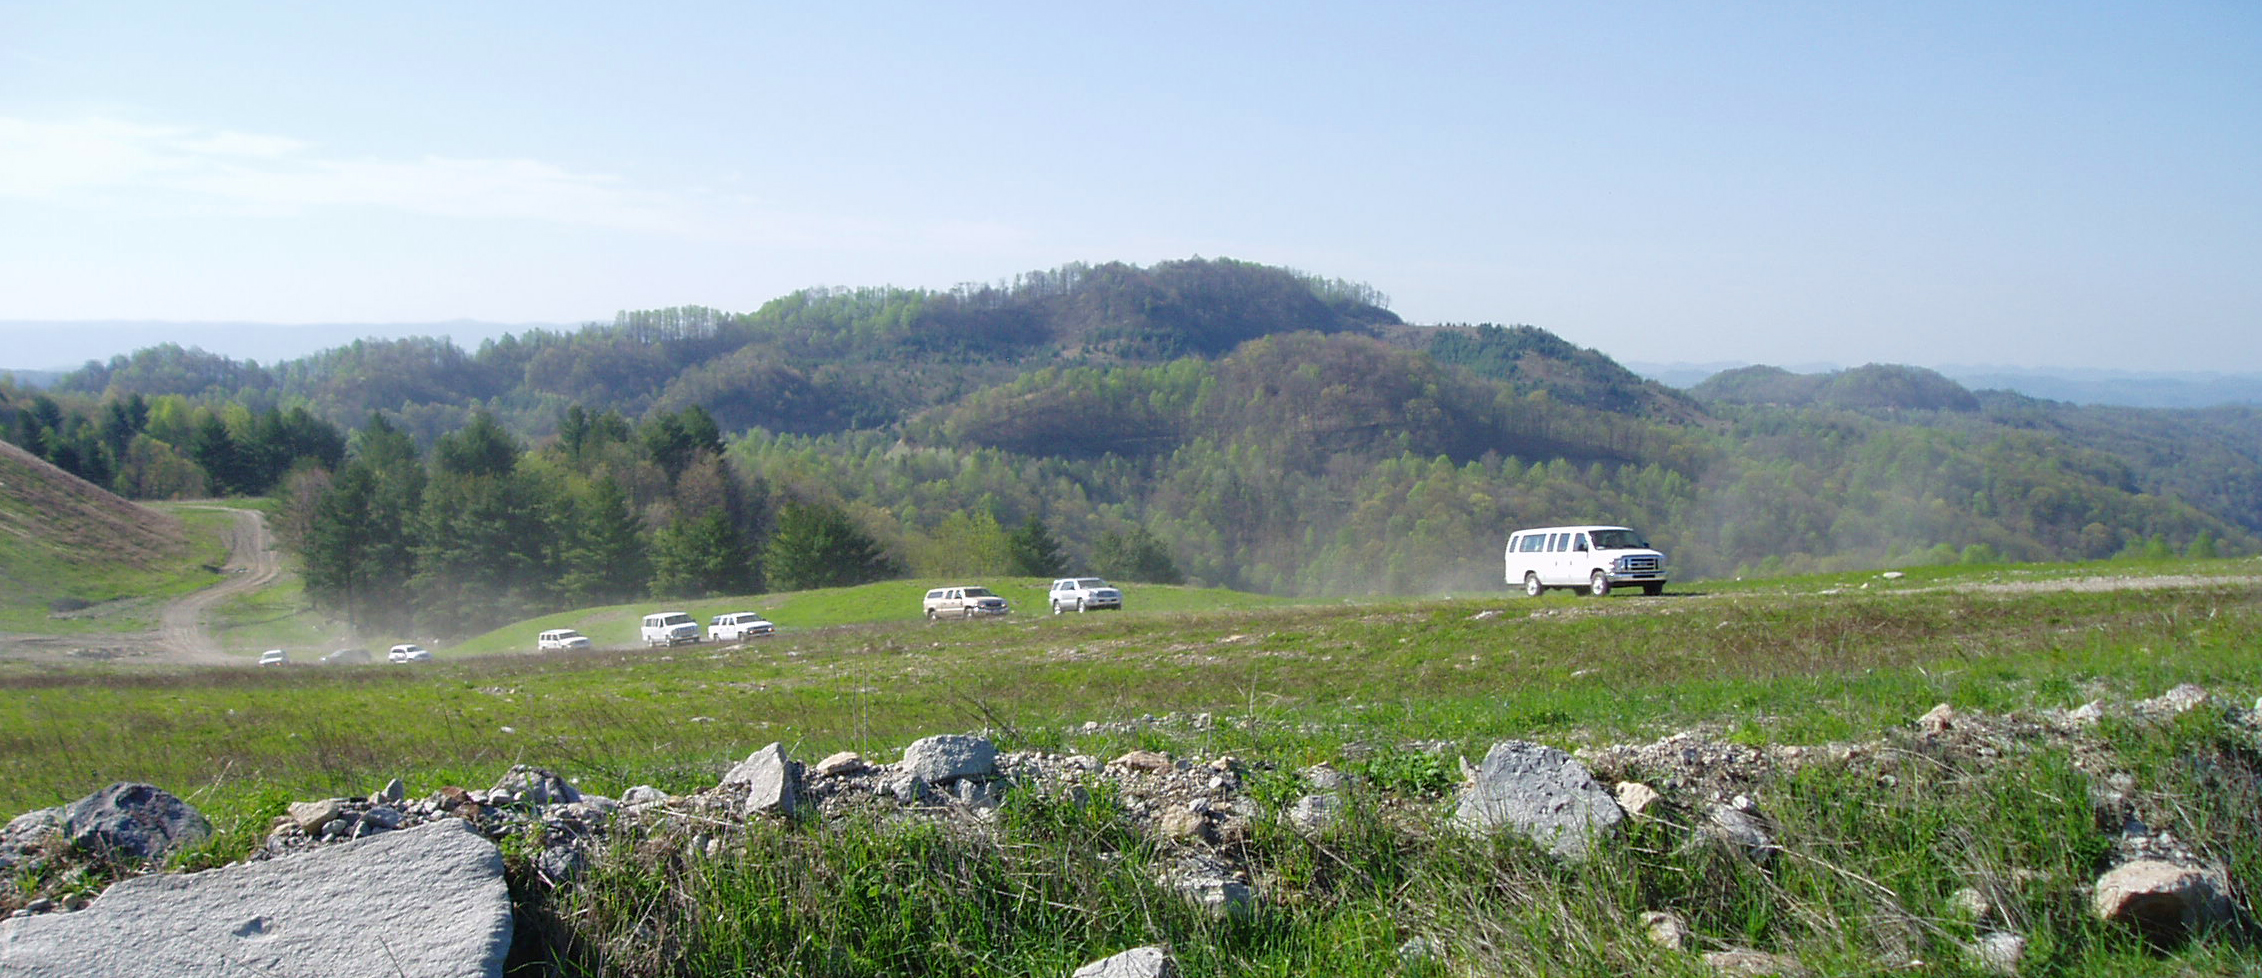 Field tour caravan for the 2009 Geomorphic Reclamation Forum in Bristol, VA